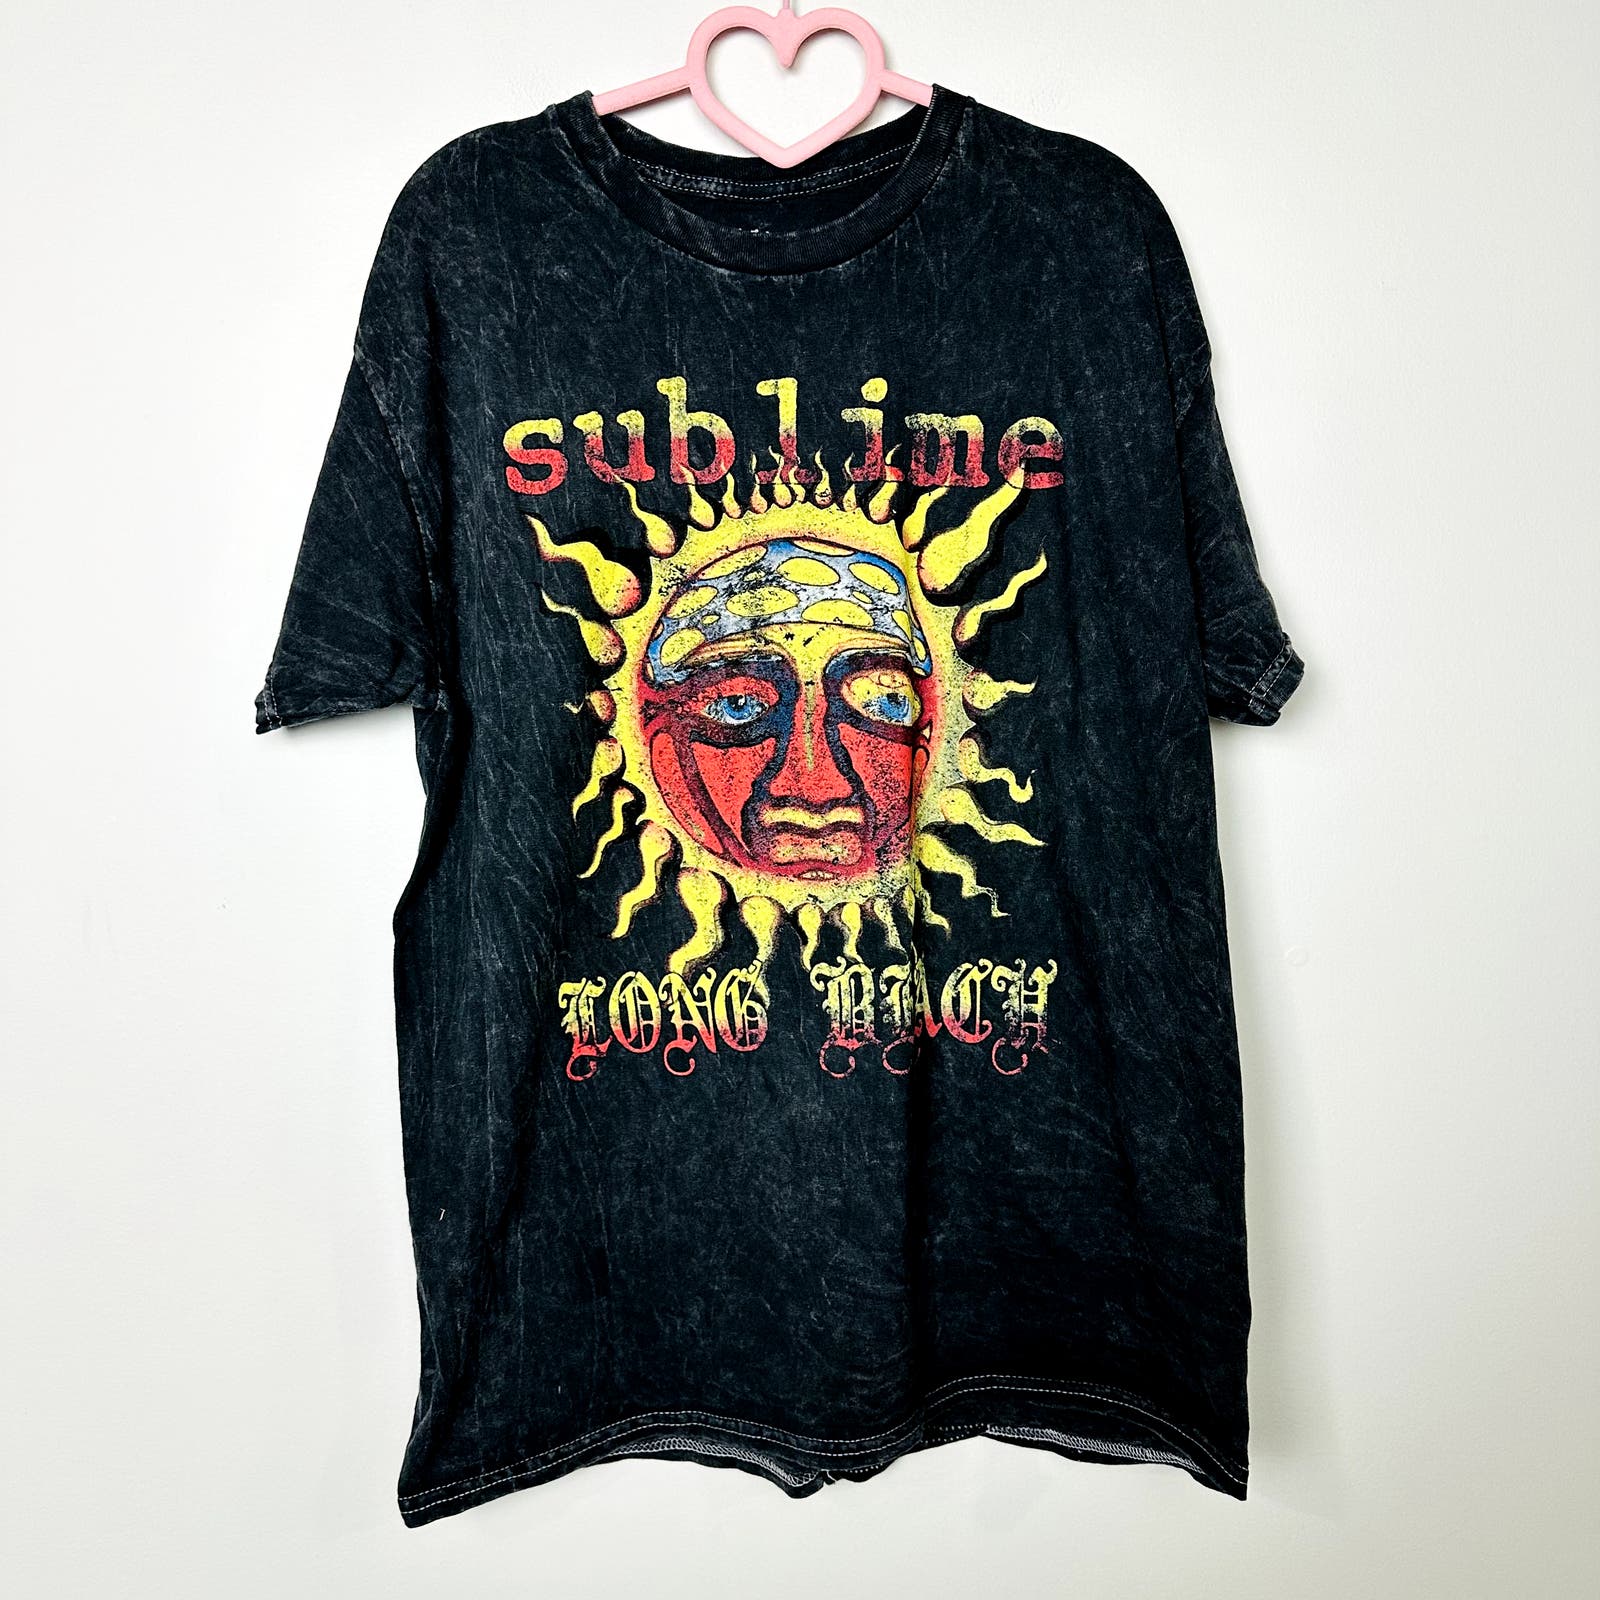 Sublime NWOT Graphic Short Sleeve Band T-Shirt Top Black Acid Wash Size Large